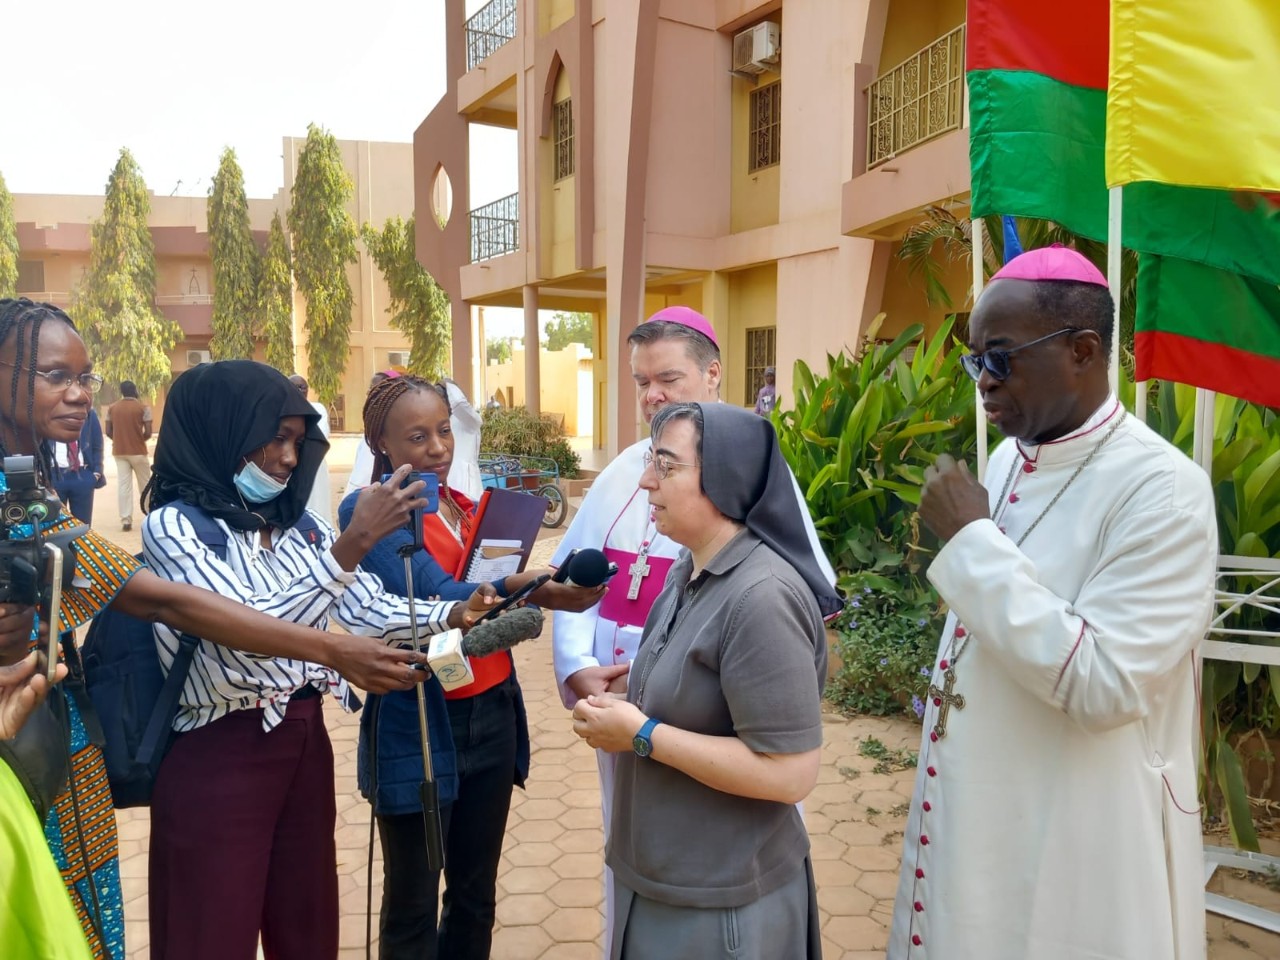 Sister Alessandra Smerilli visits Burkina Faso